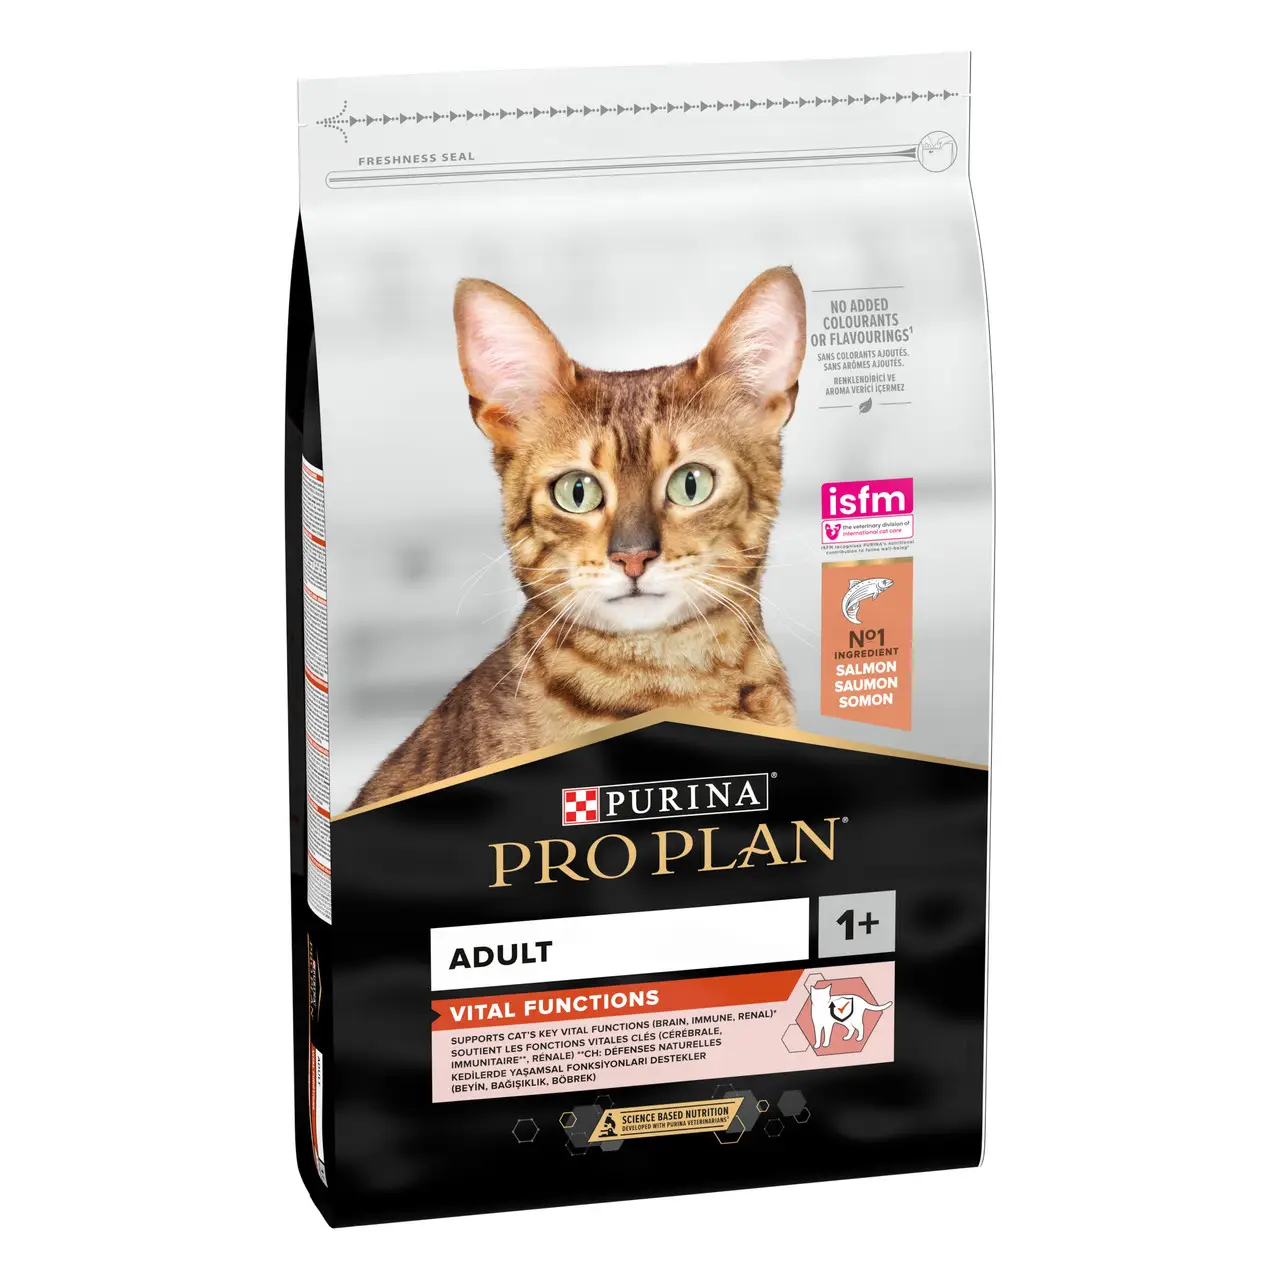 Pro Plan Vital Functions 400 г (на вес) корм для кошек с лососем1